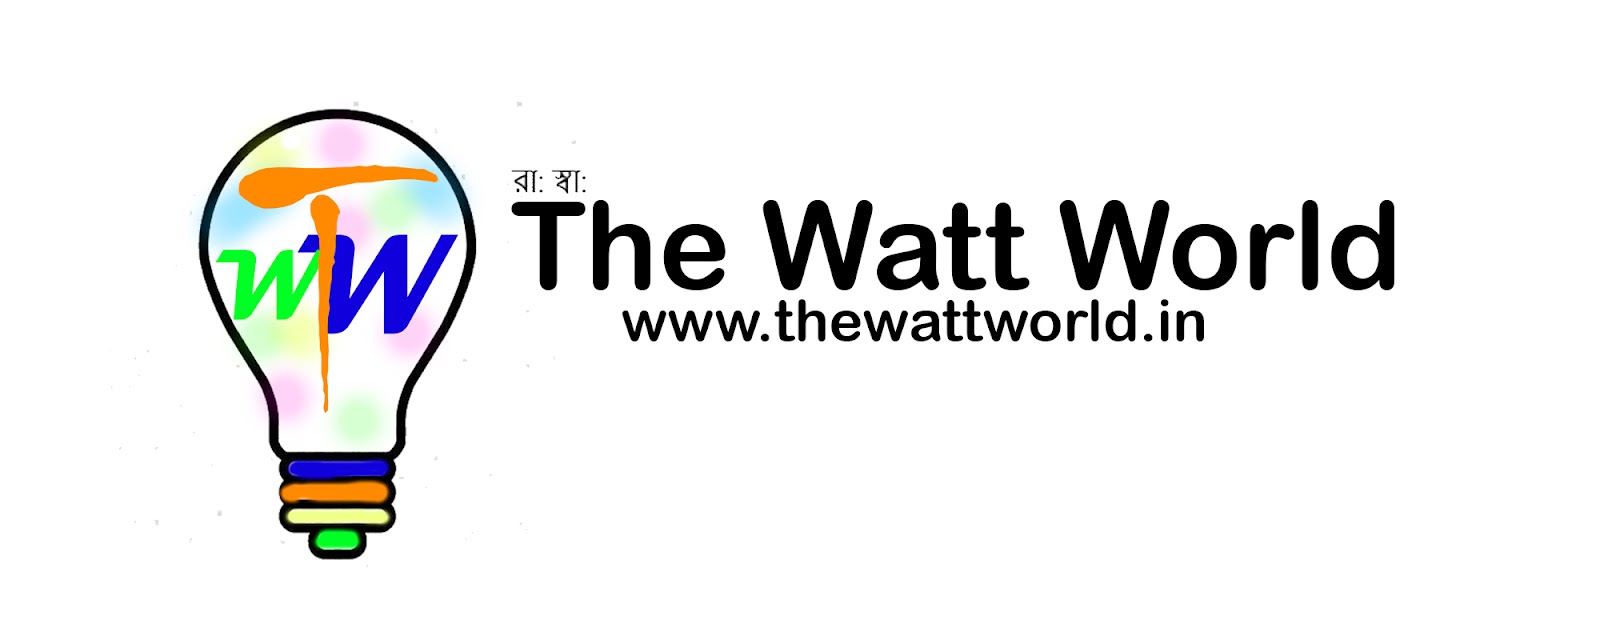 The Watt World